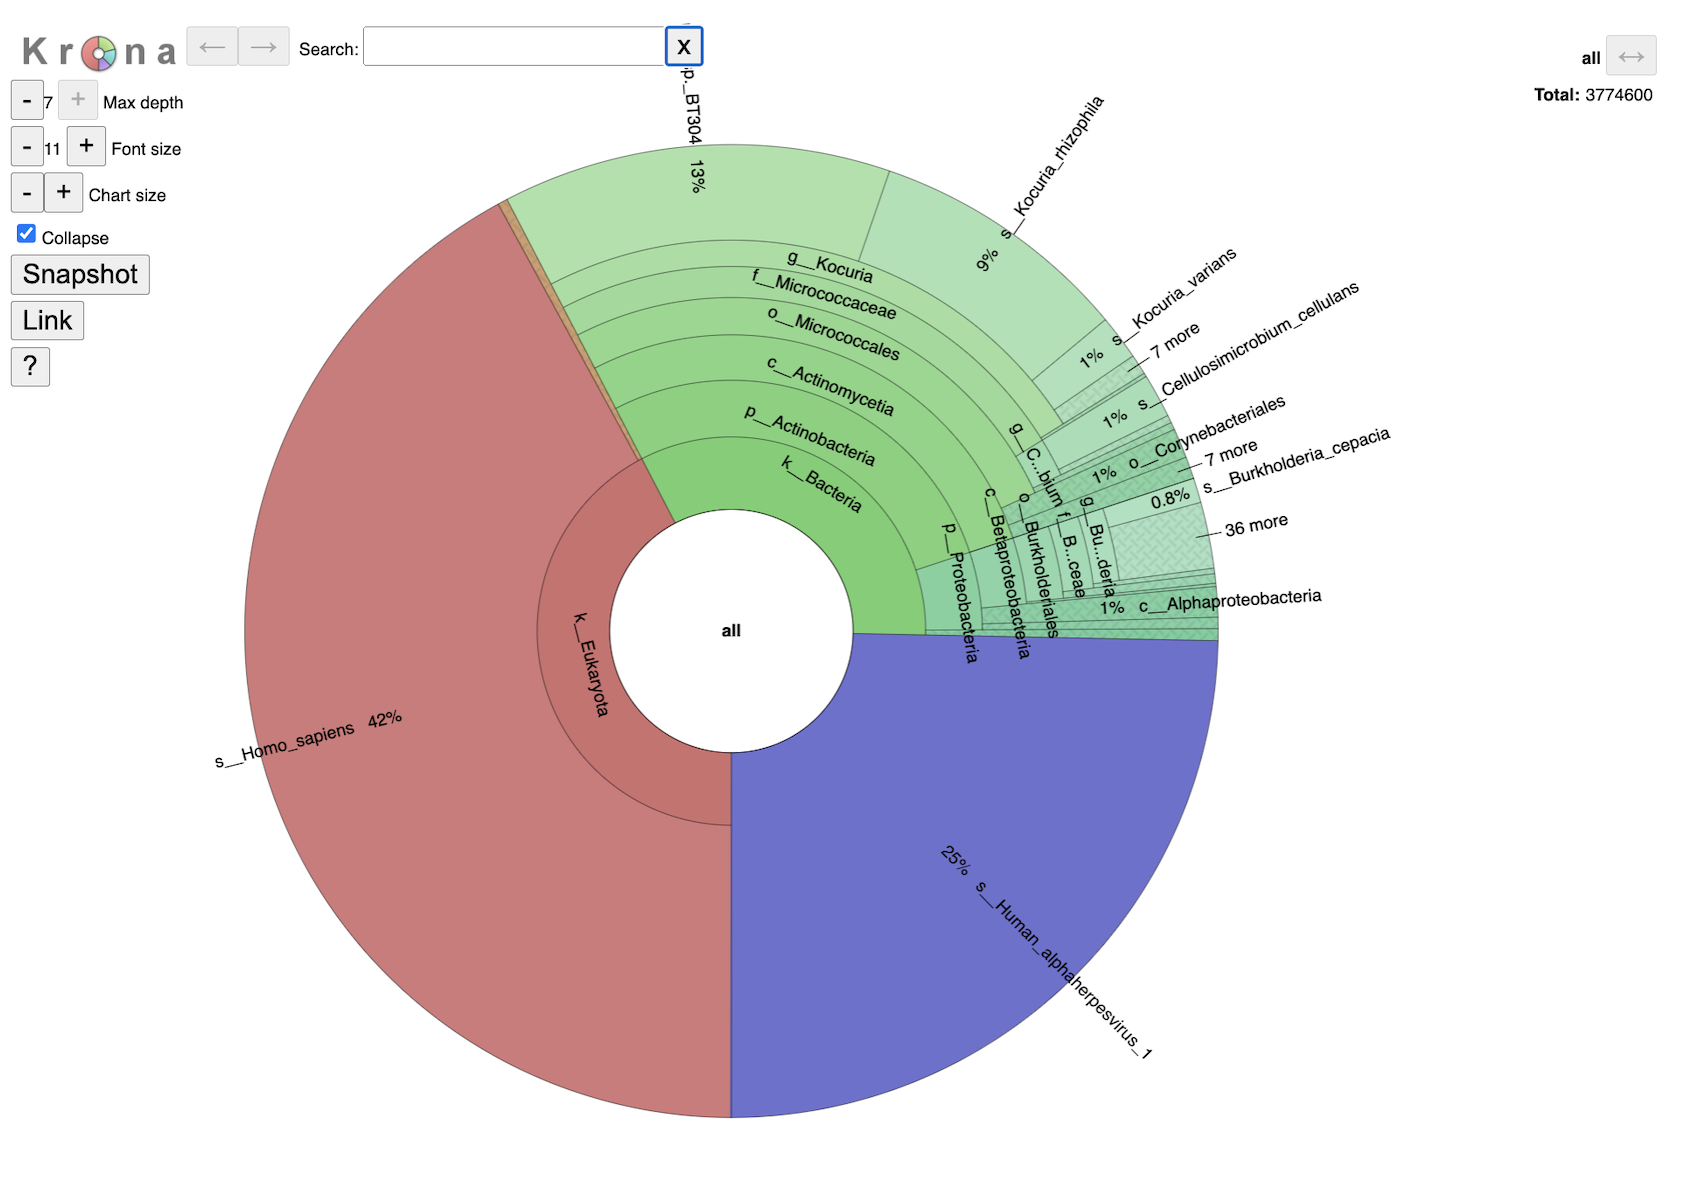 Krona-based interactive Taxonomic Classification Chart